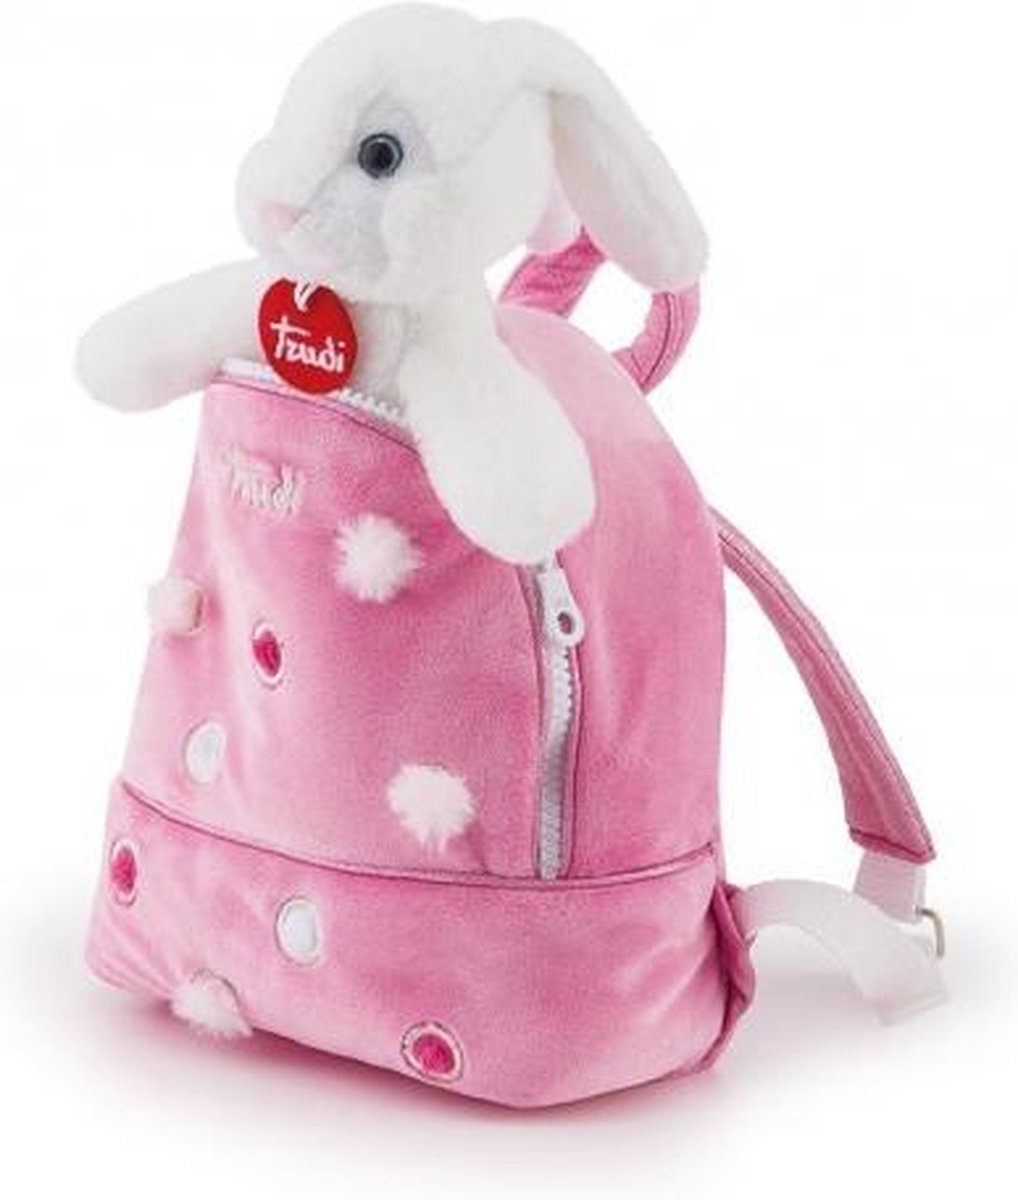 knuffel konijn in rugzak wit/roze 19 x 20 x 11 cm